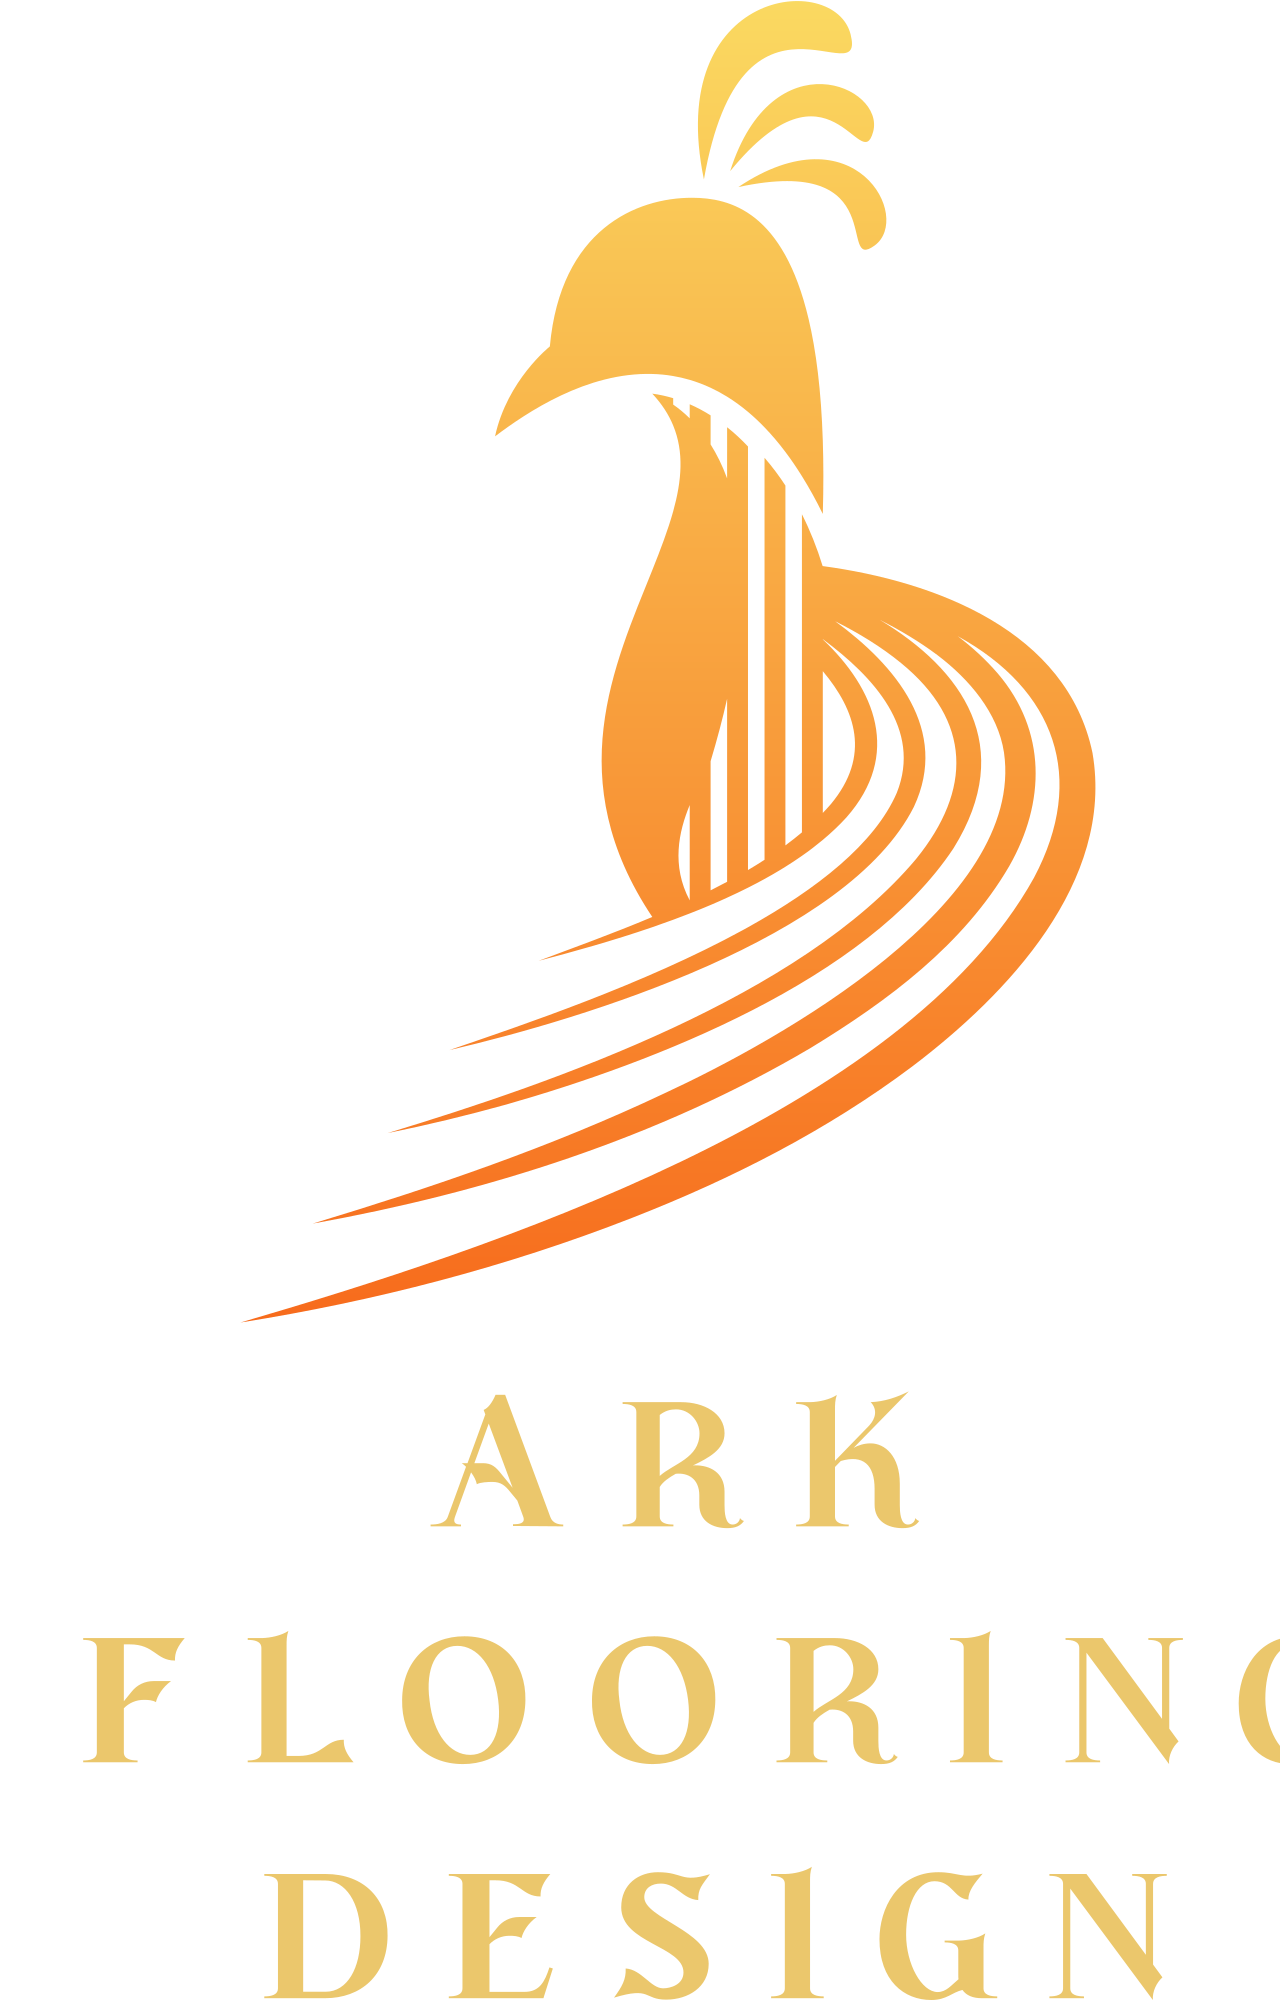             Ark 
            FLOORING
            DESIGN's web page